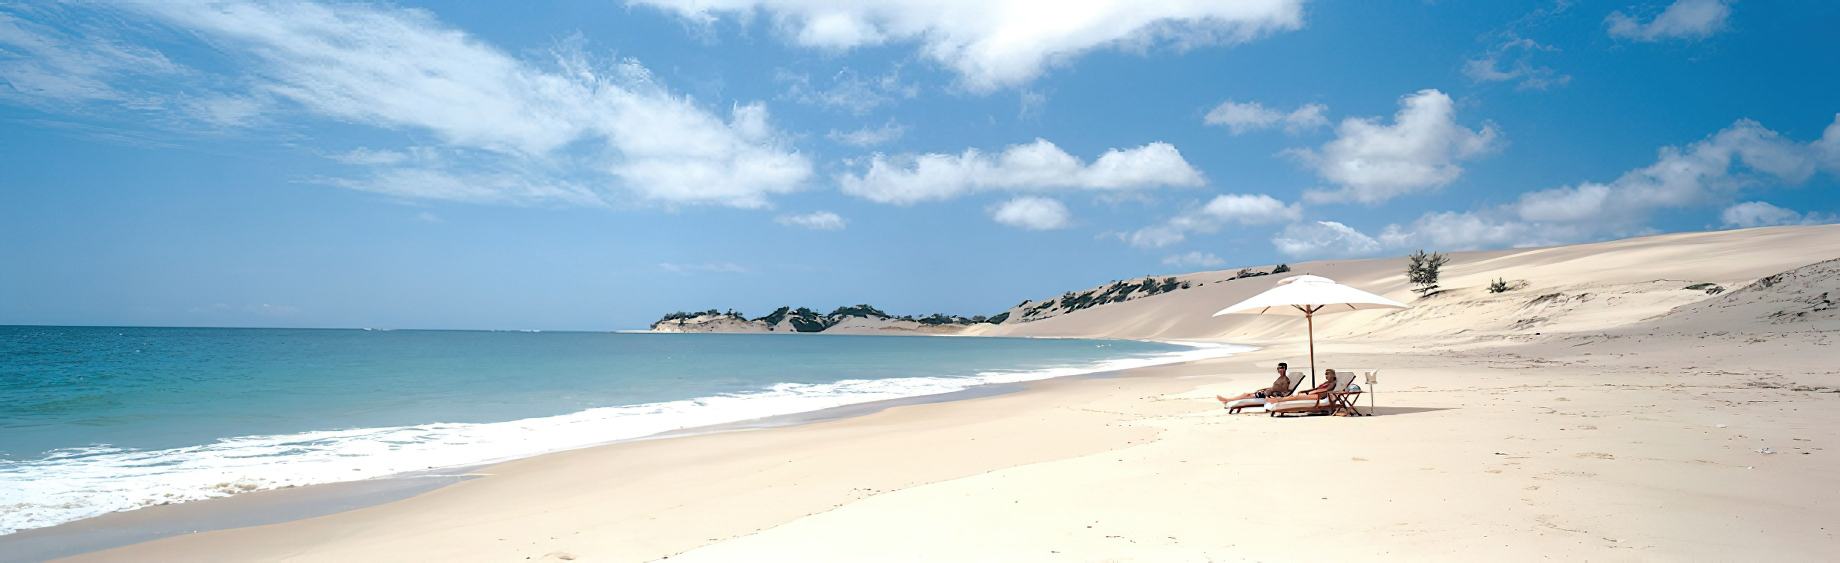 Anantara Bazaruto Island Resort – Mozambique – Sailfish Bay Beach